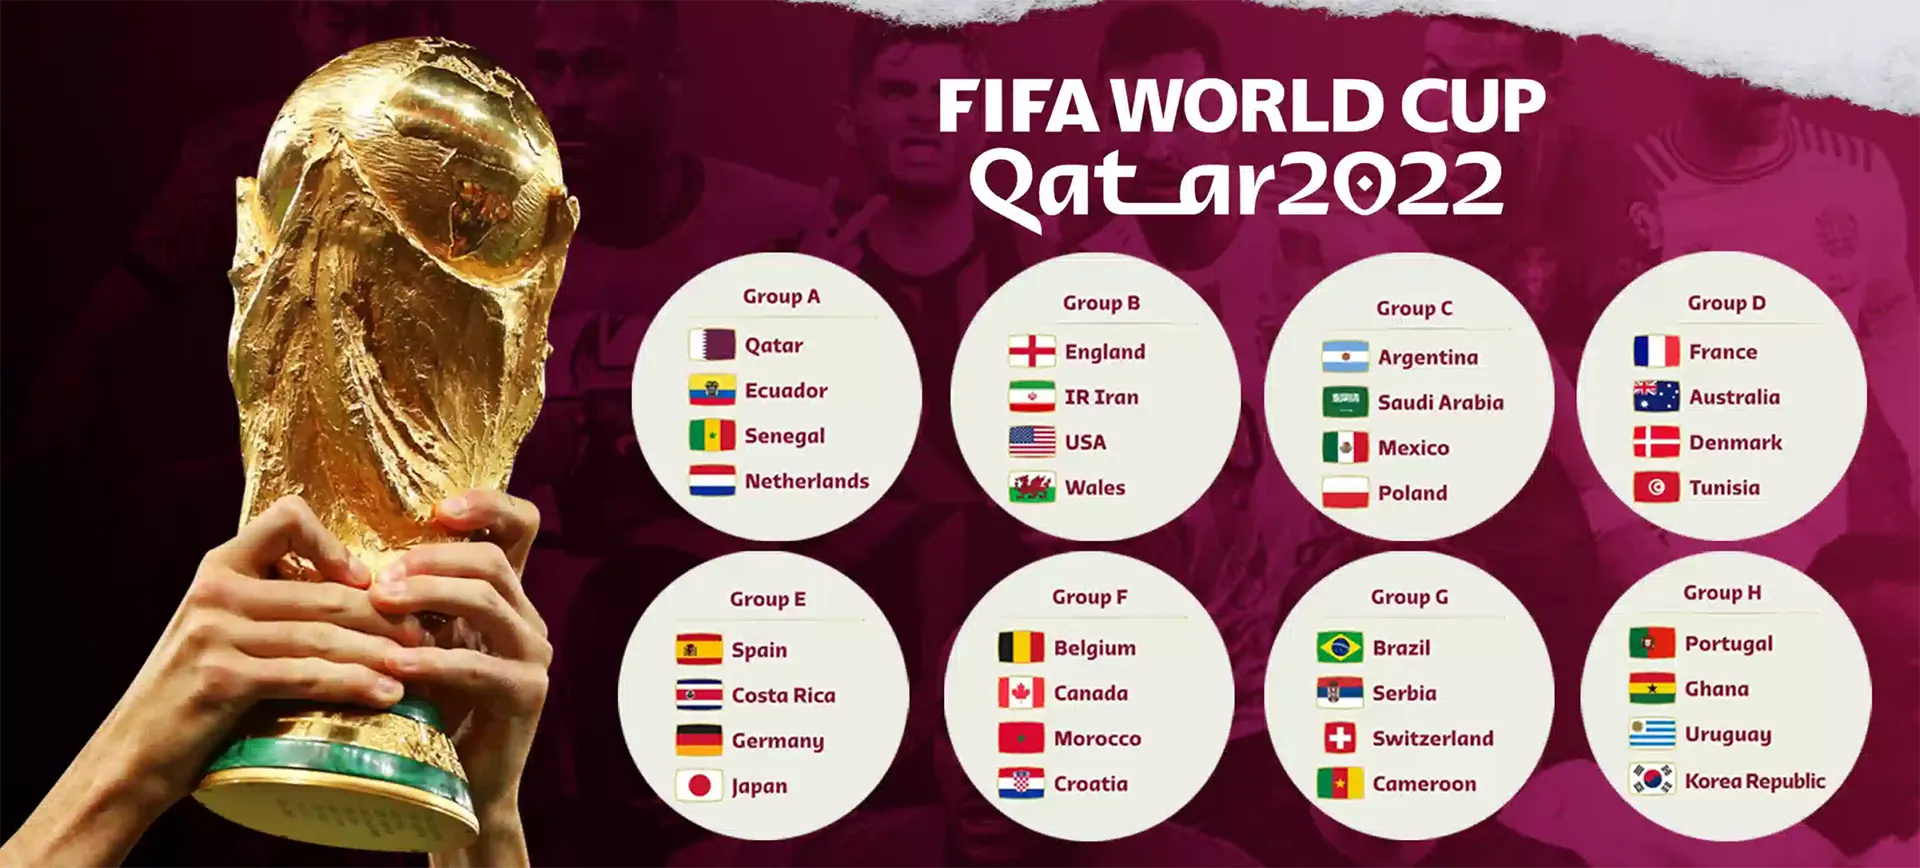 the 2022 qatar fifa world cup OKBET